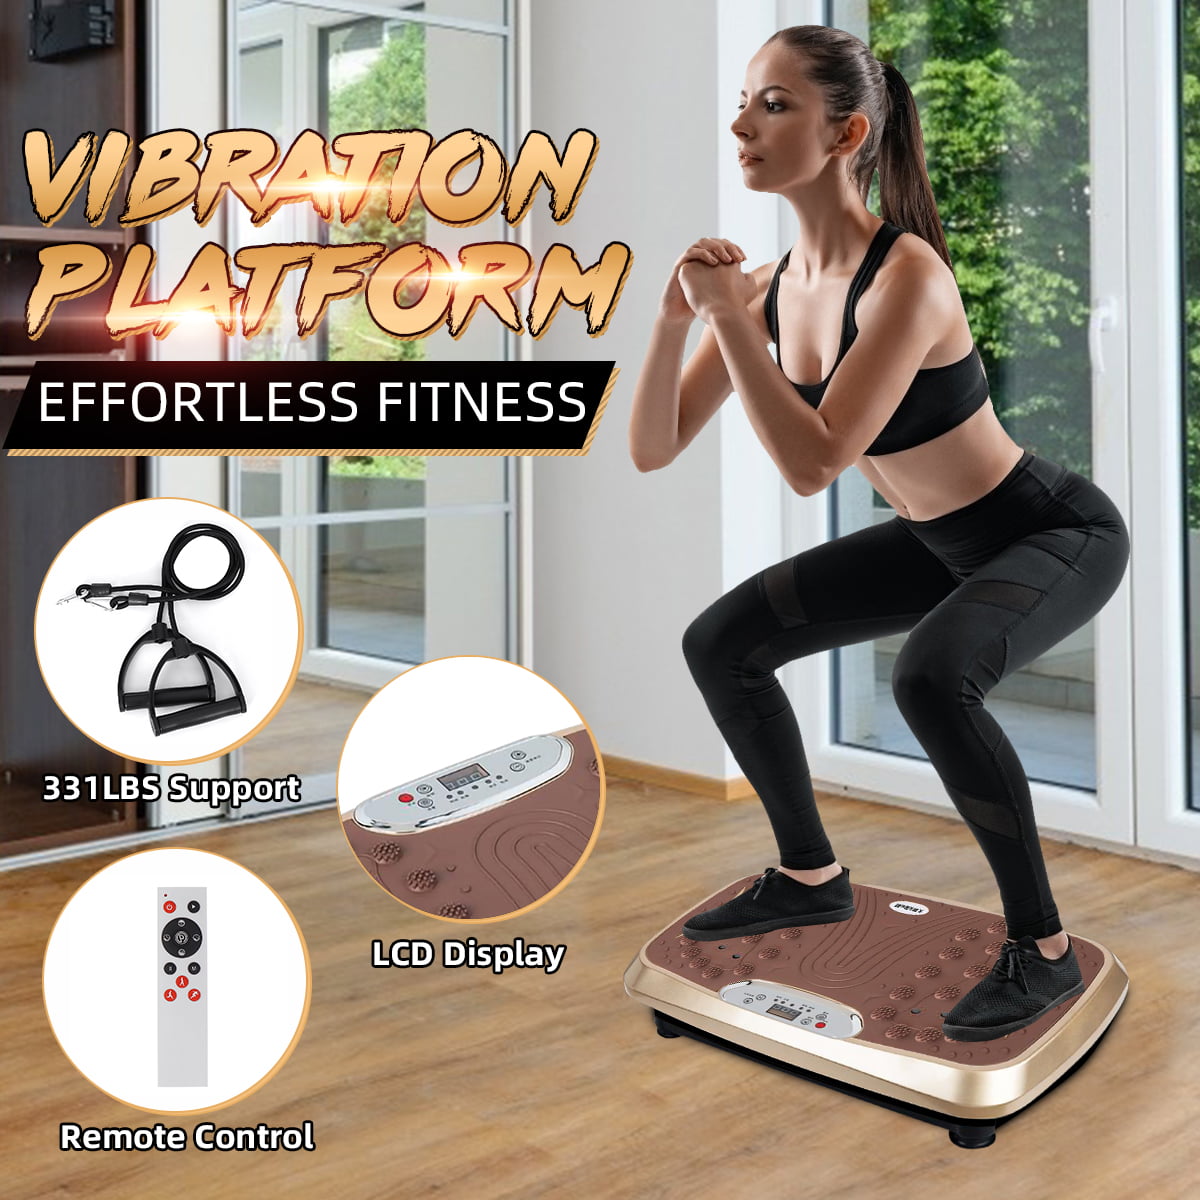 Details about   Vibration Platform Plate Whole Body Exercise Fitness Massager Machine Slim USA 